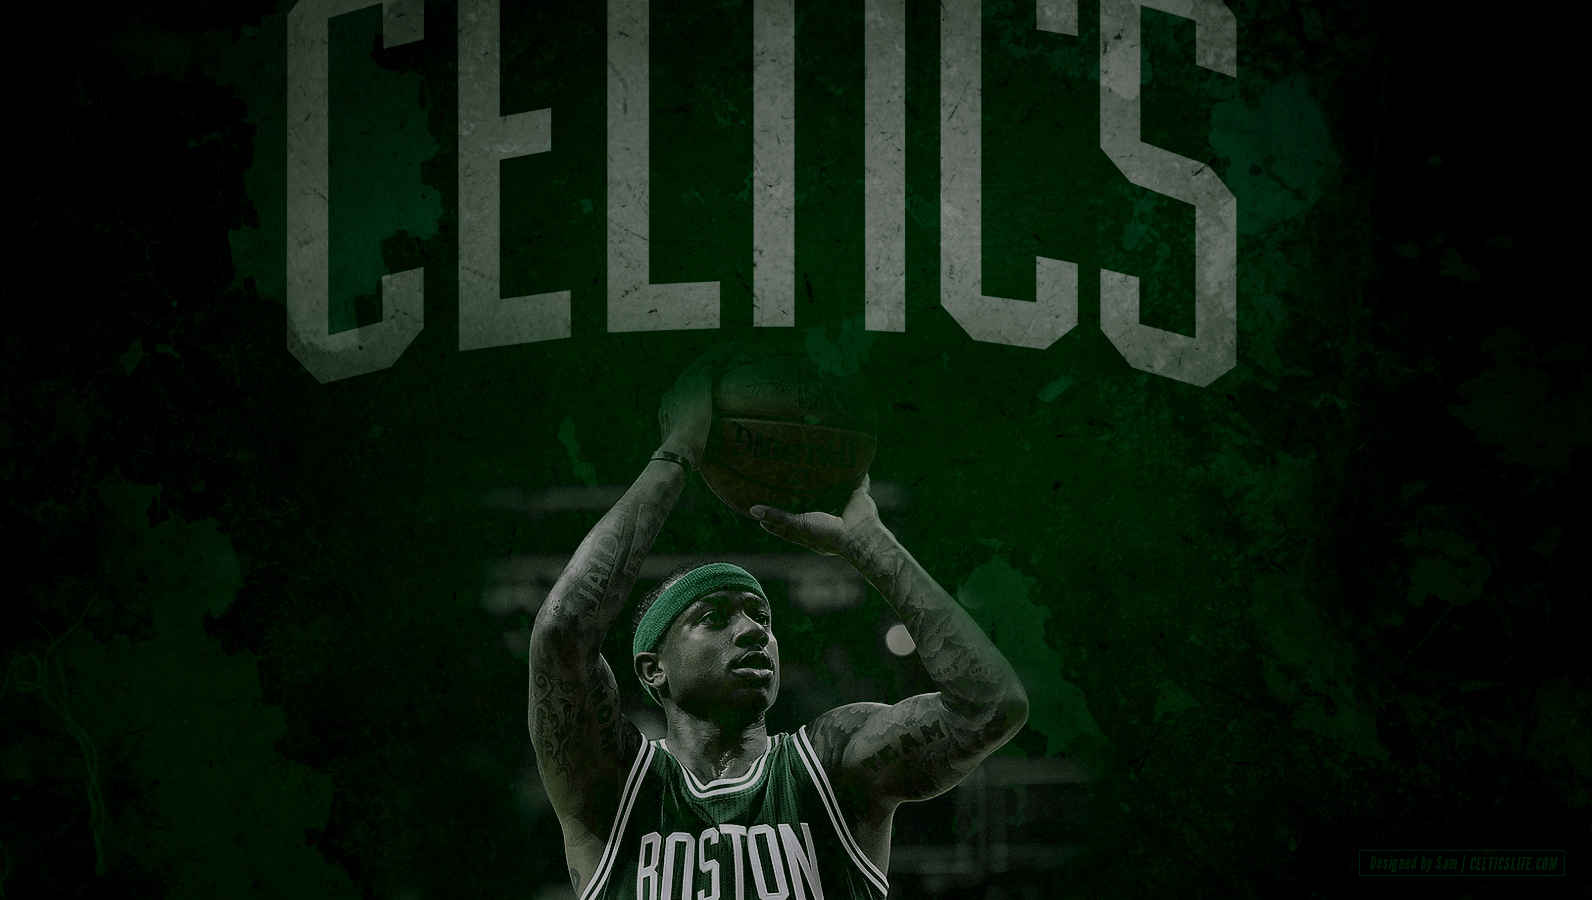 Wallpaper Wednesday: Isaiah Thomas | CelticsLife.com - Boston Celtics Fan Site, Blog ...1592 x 900